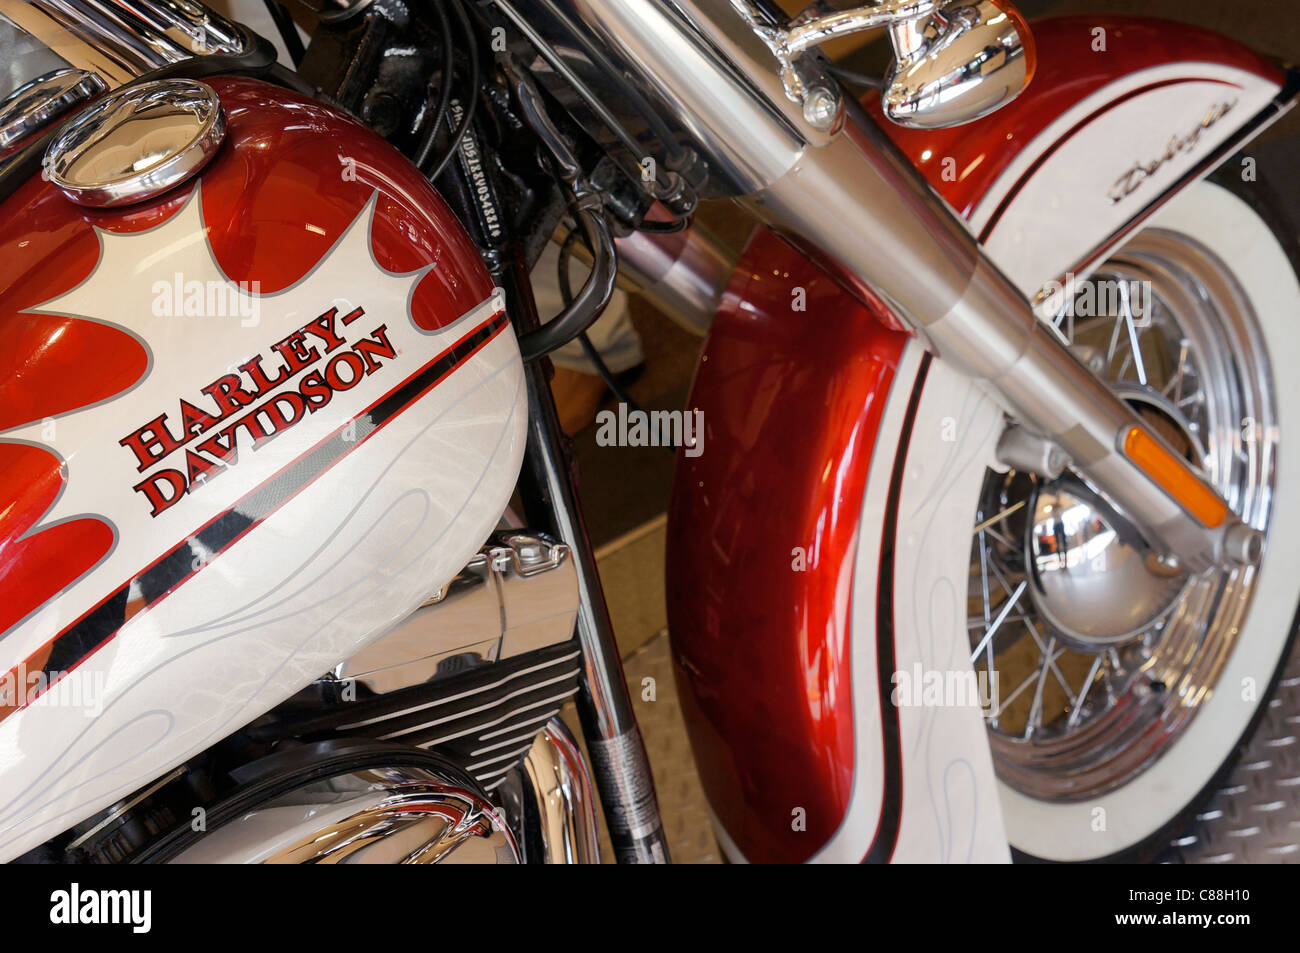 Libre de moto Harley Davidson Banque D'Images